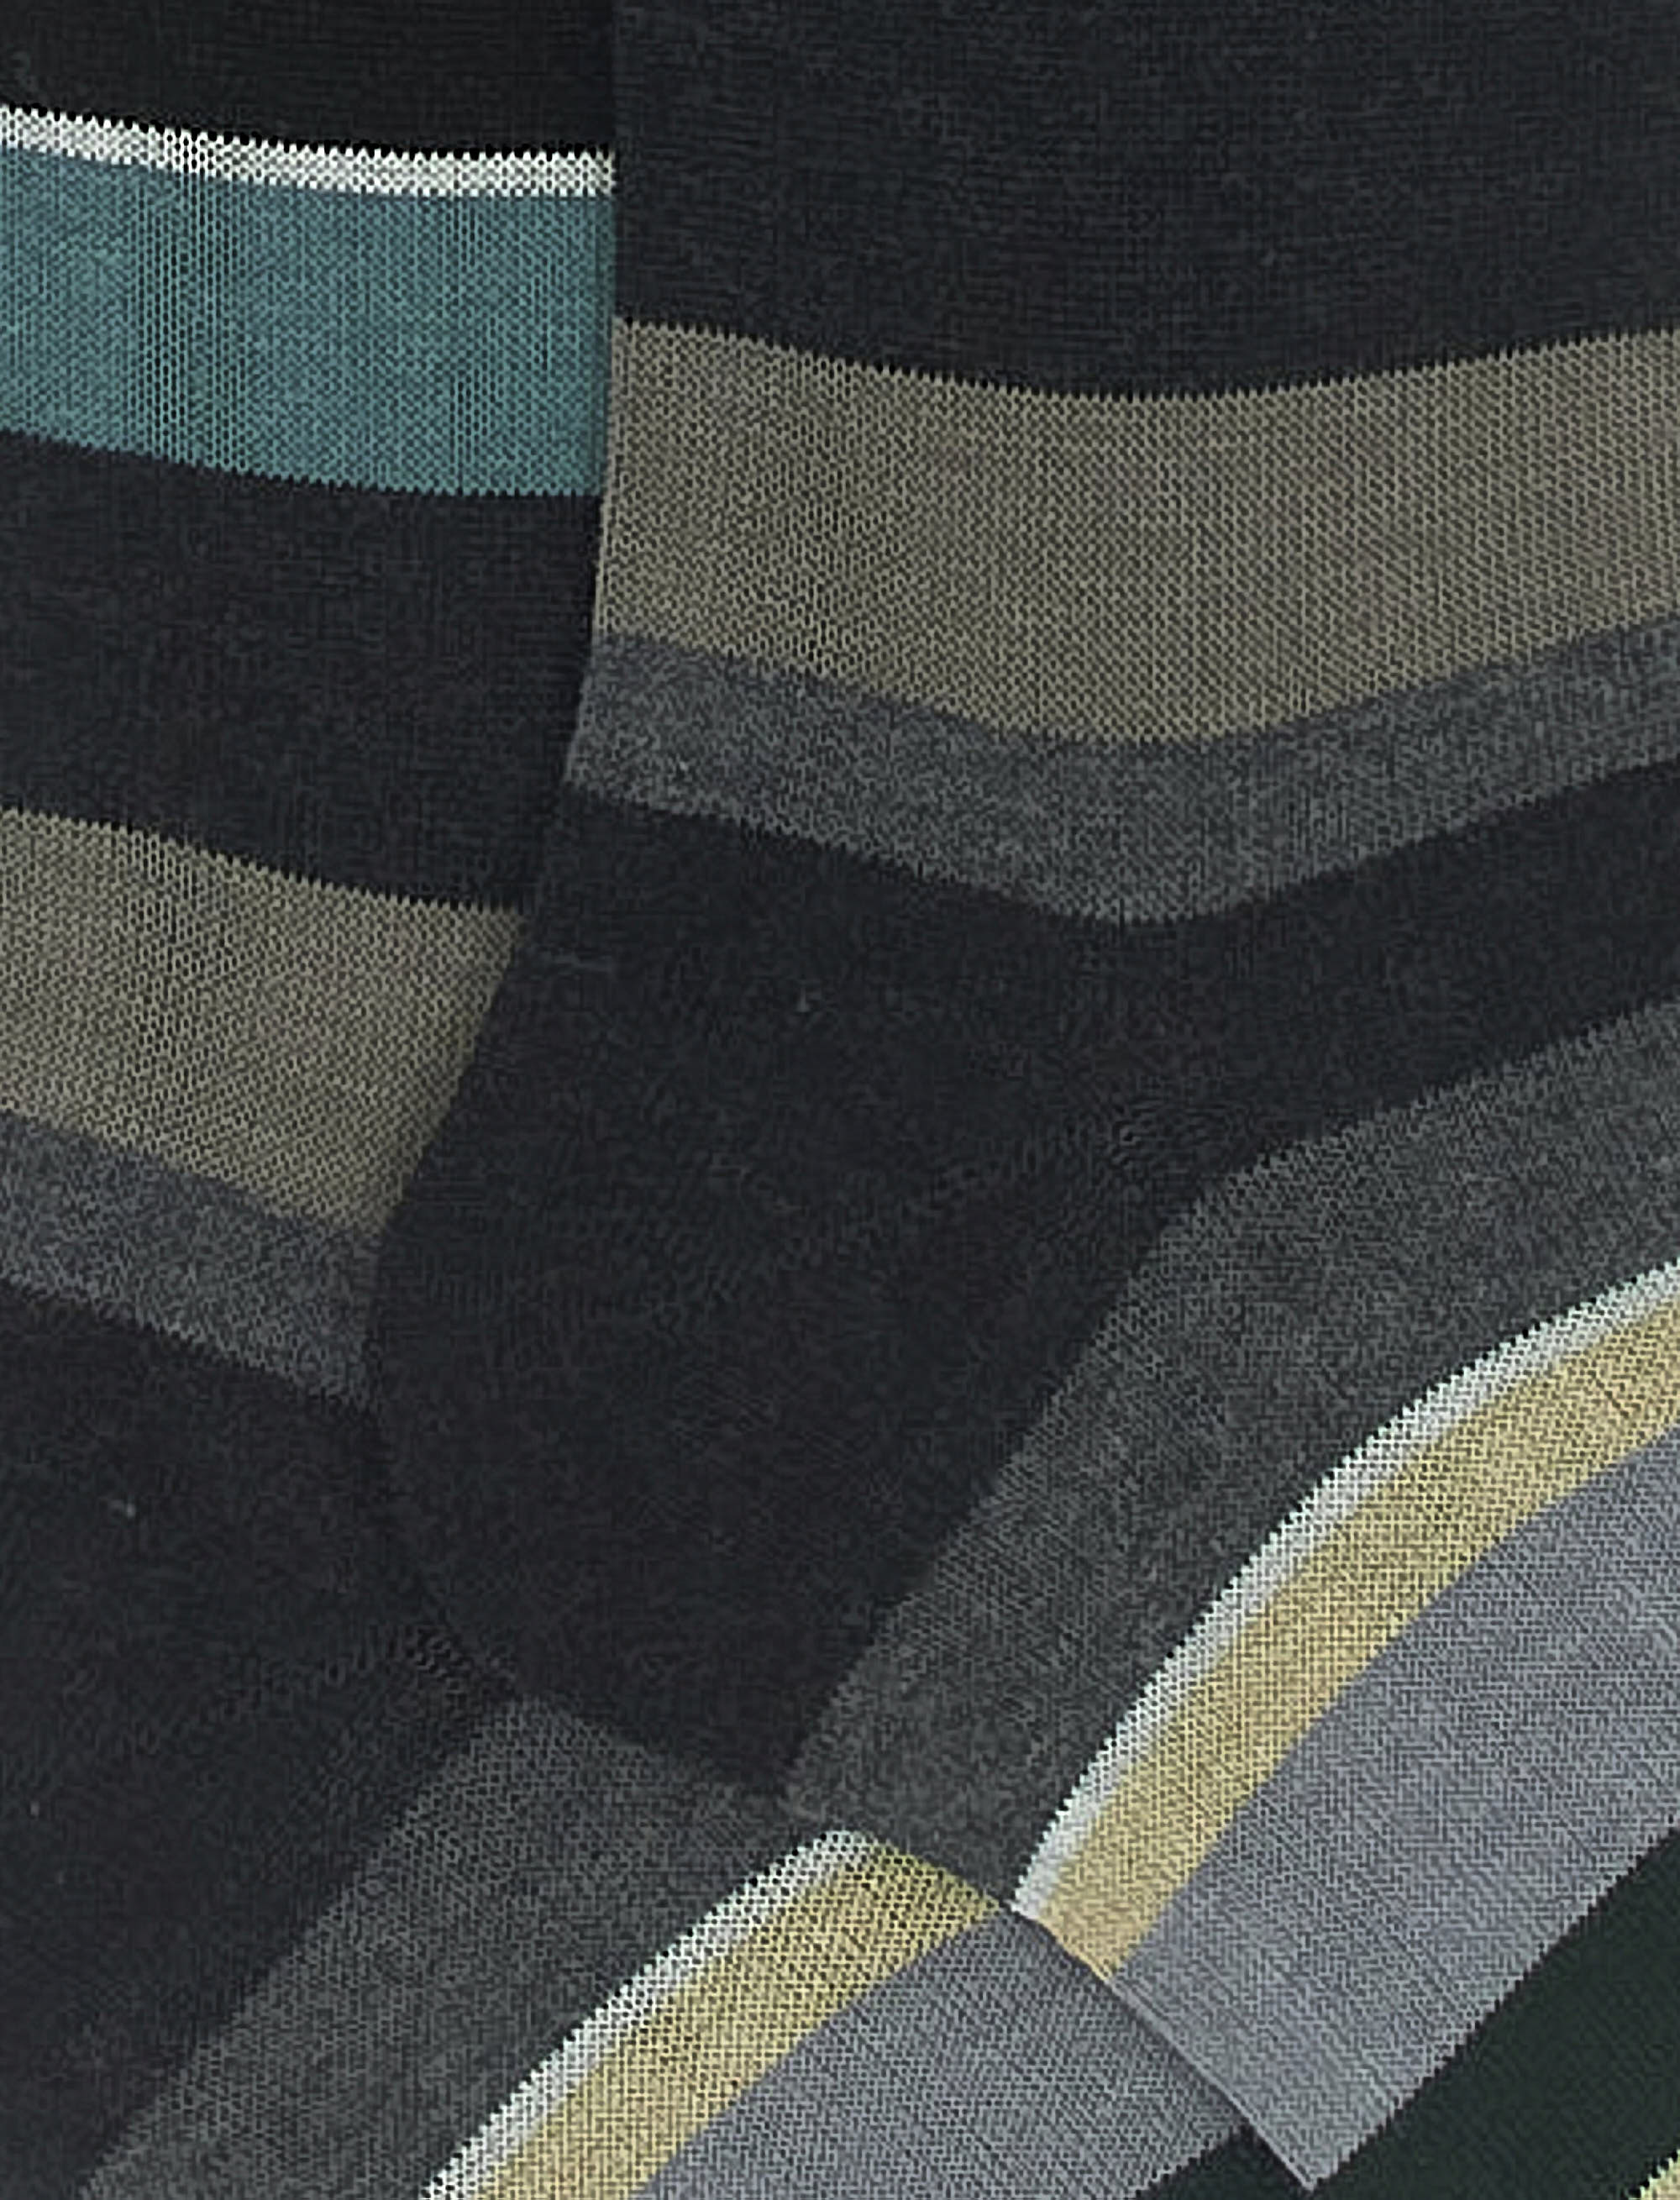 Calze lunghe donna cotone antracite righe multicolor - Gallo 1927 - Official Online Shop